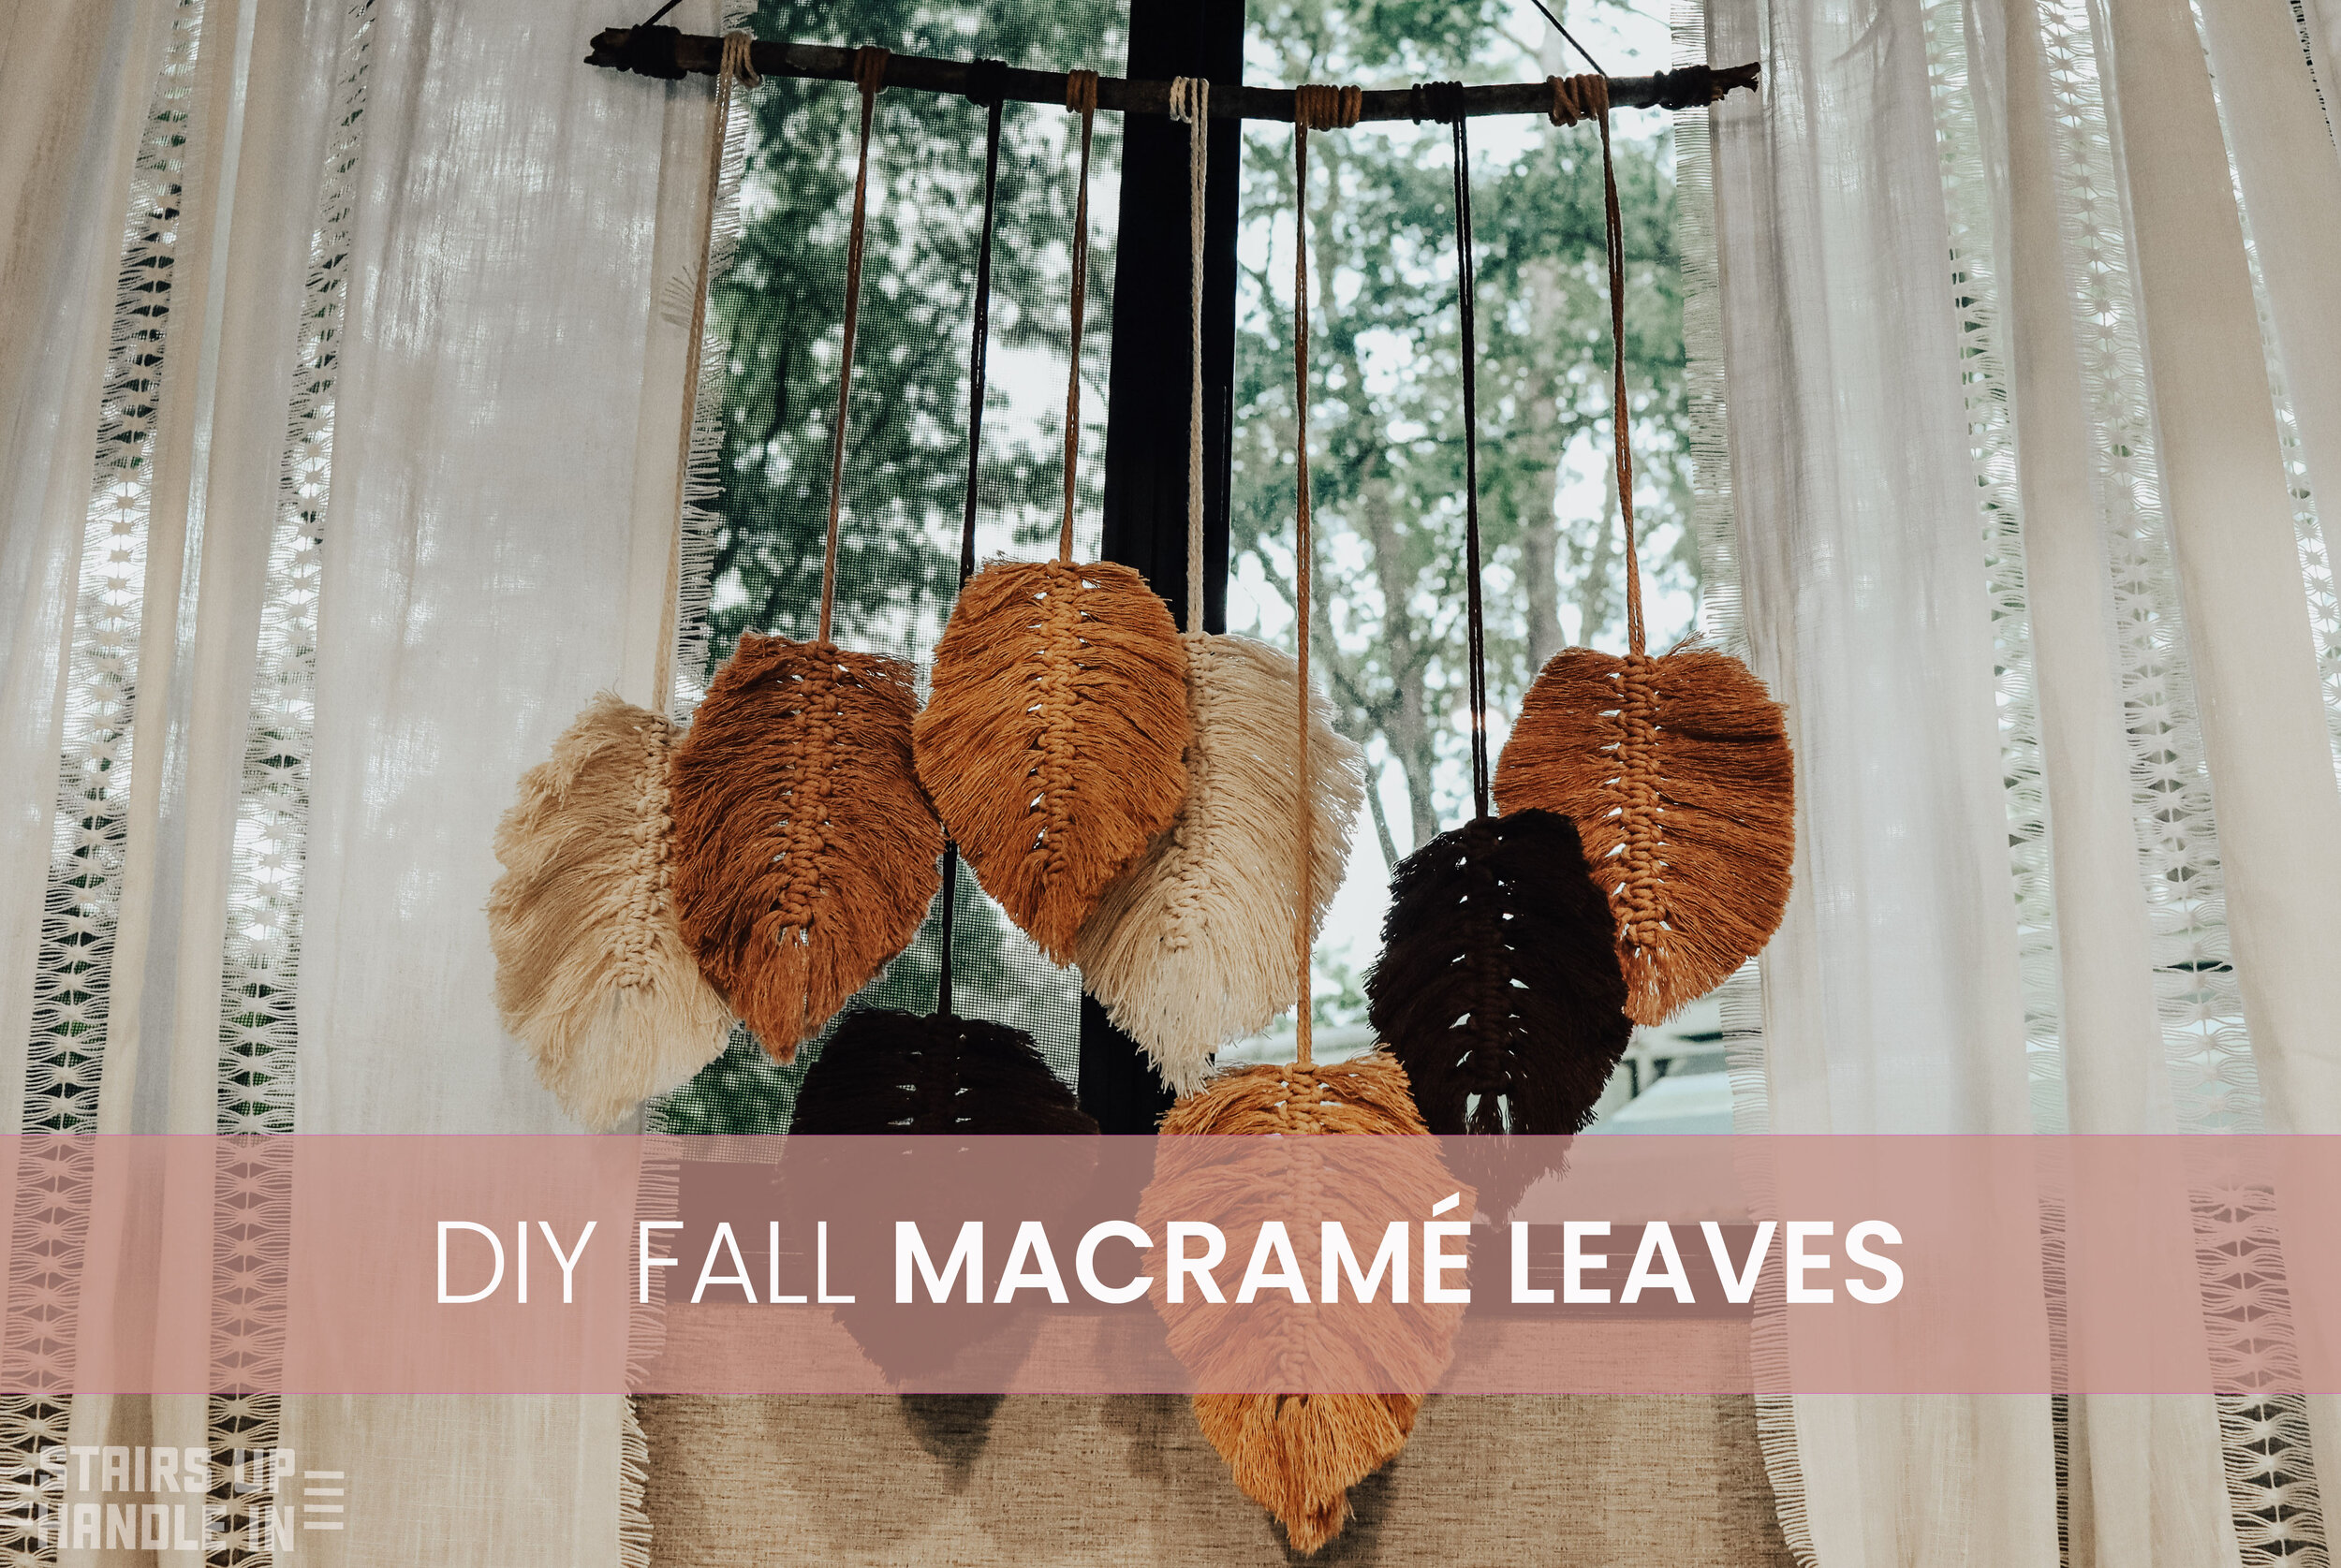 DIY Fall Macrame Leaves.jpg